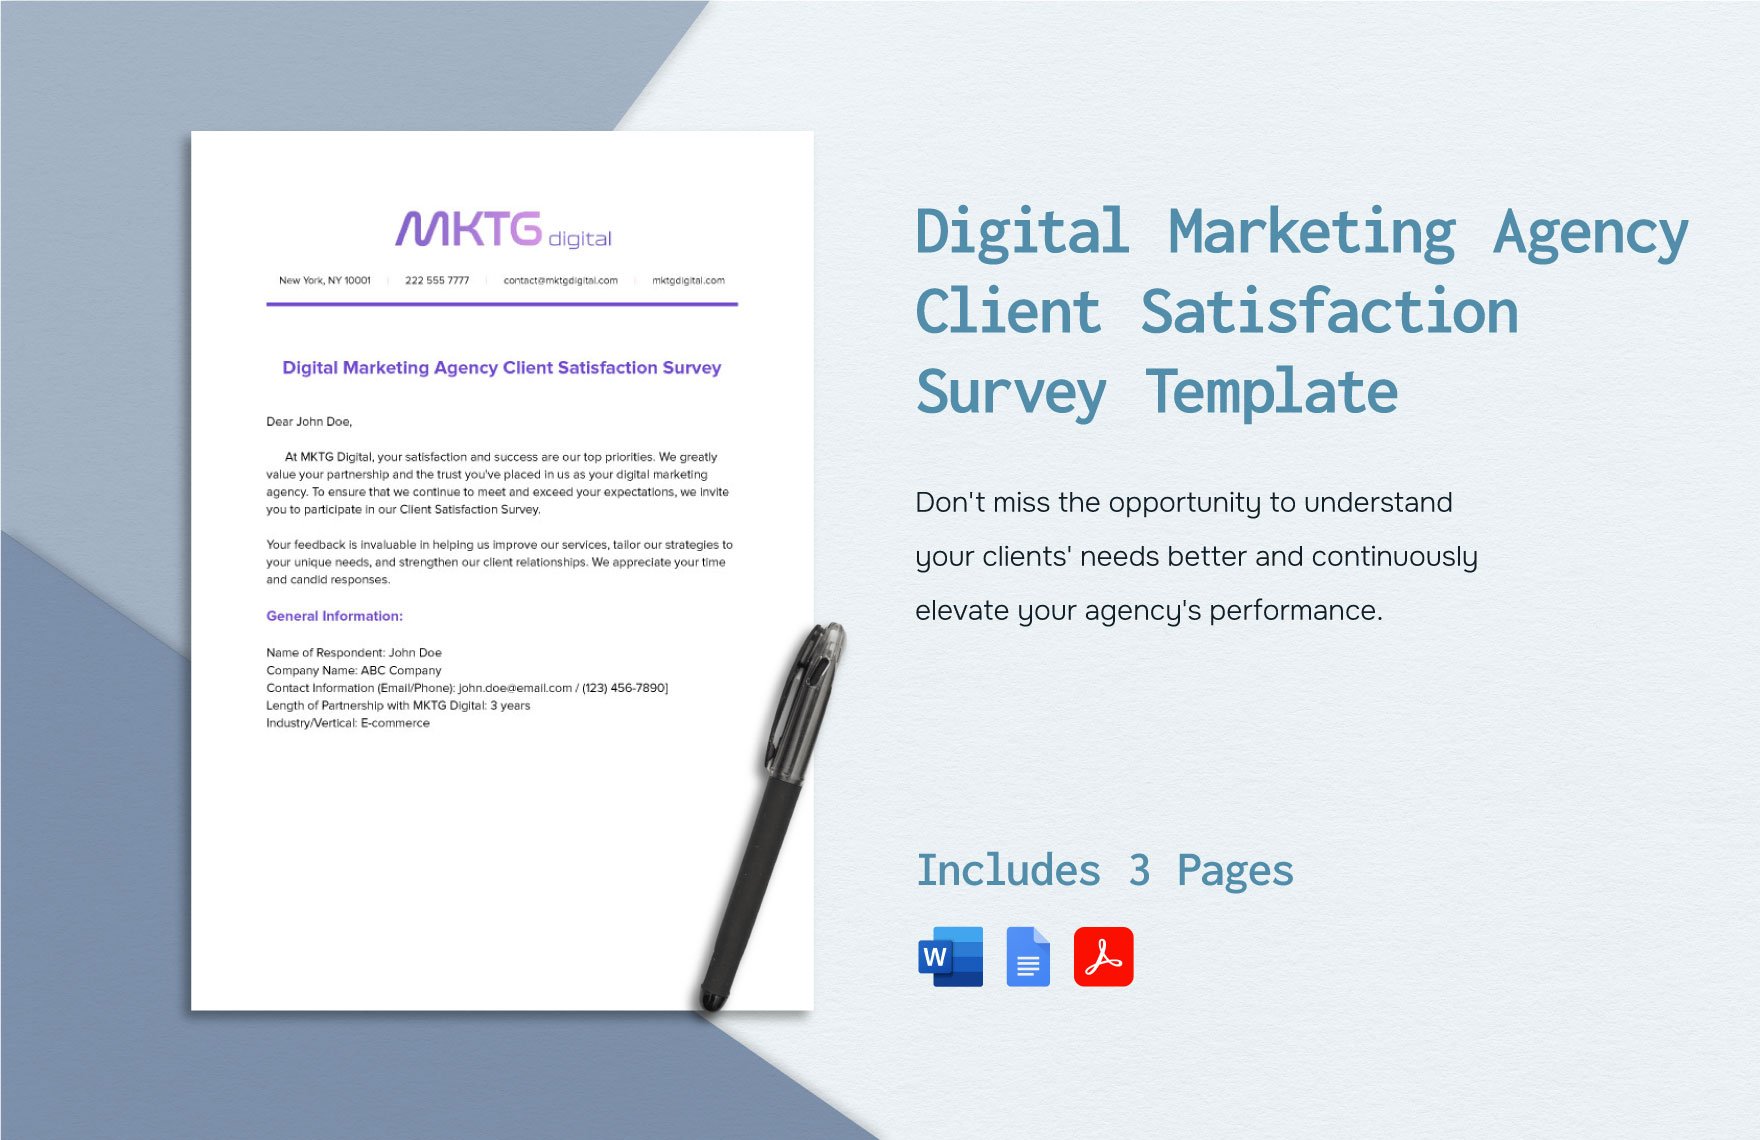 Digital Marketing Agency Client Satisfaction Survey Template